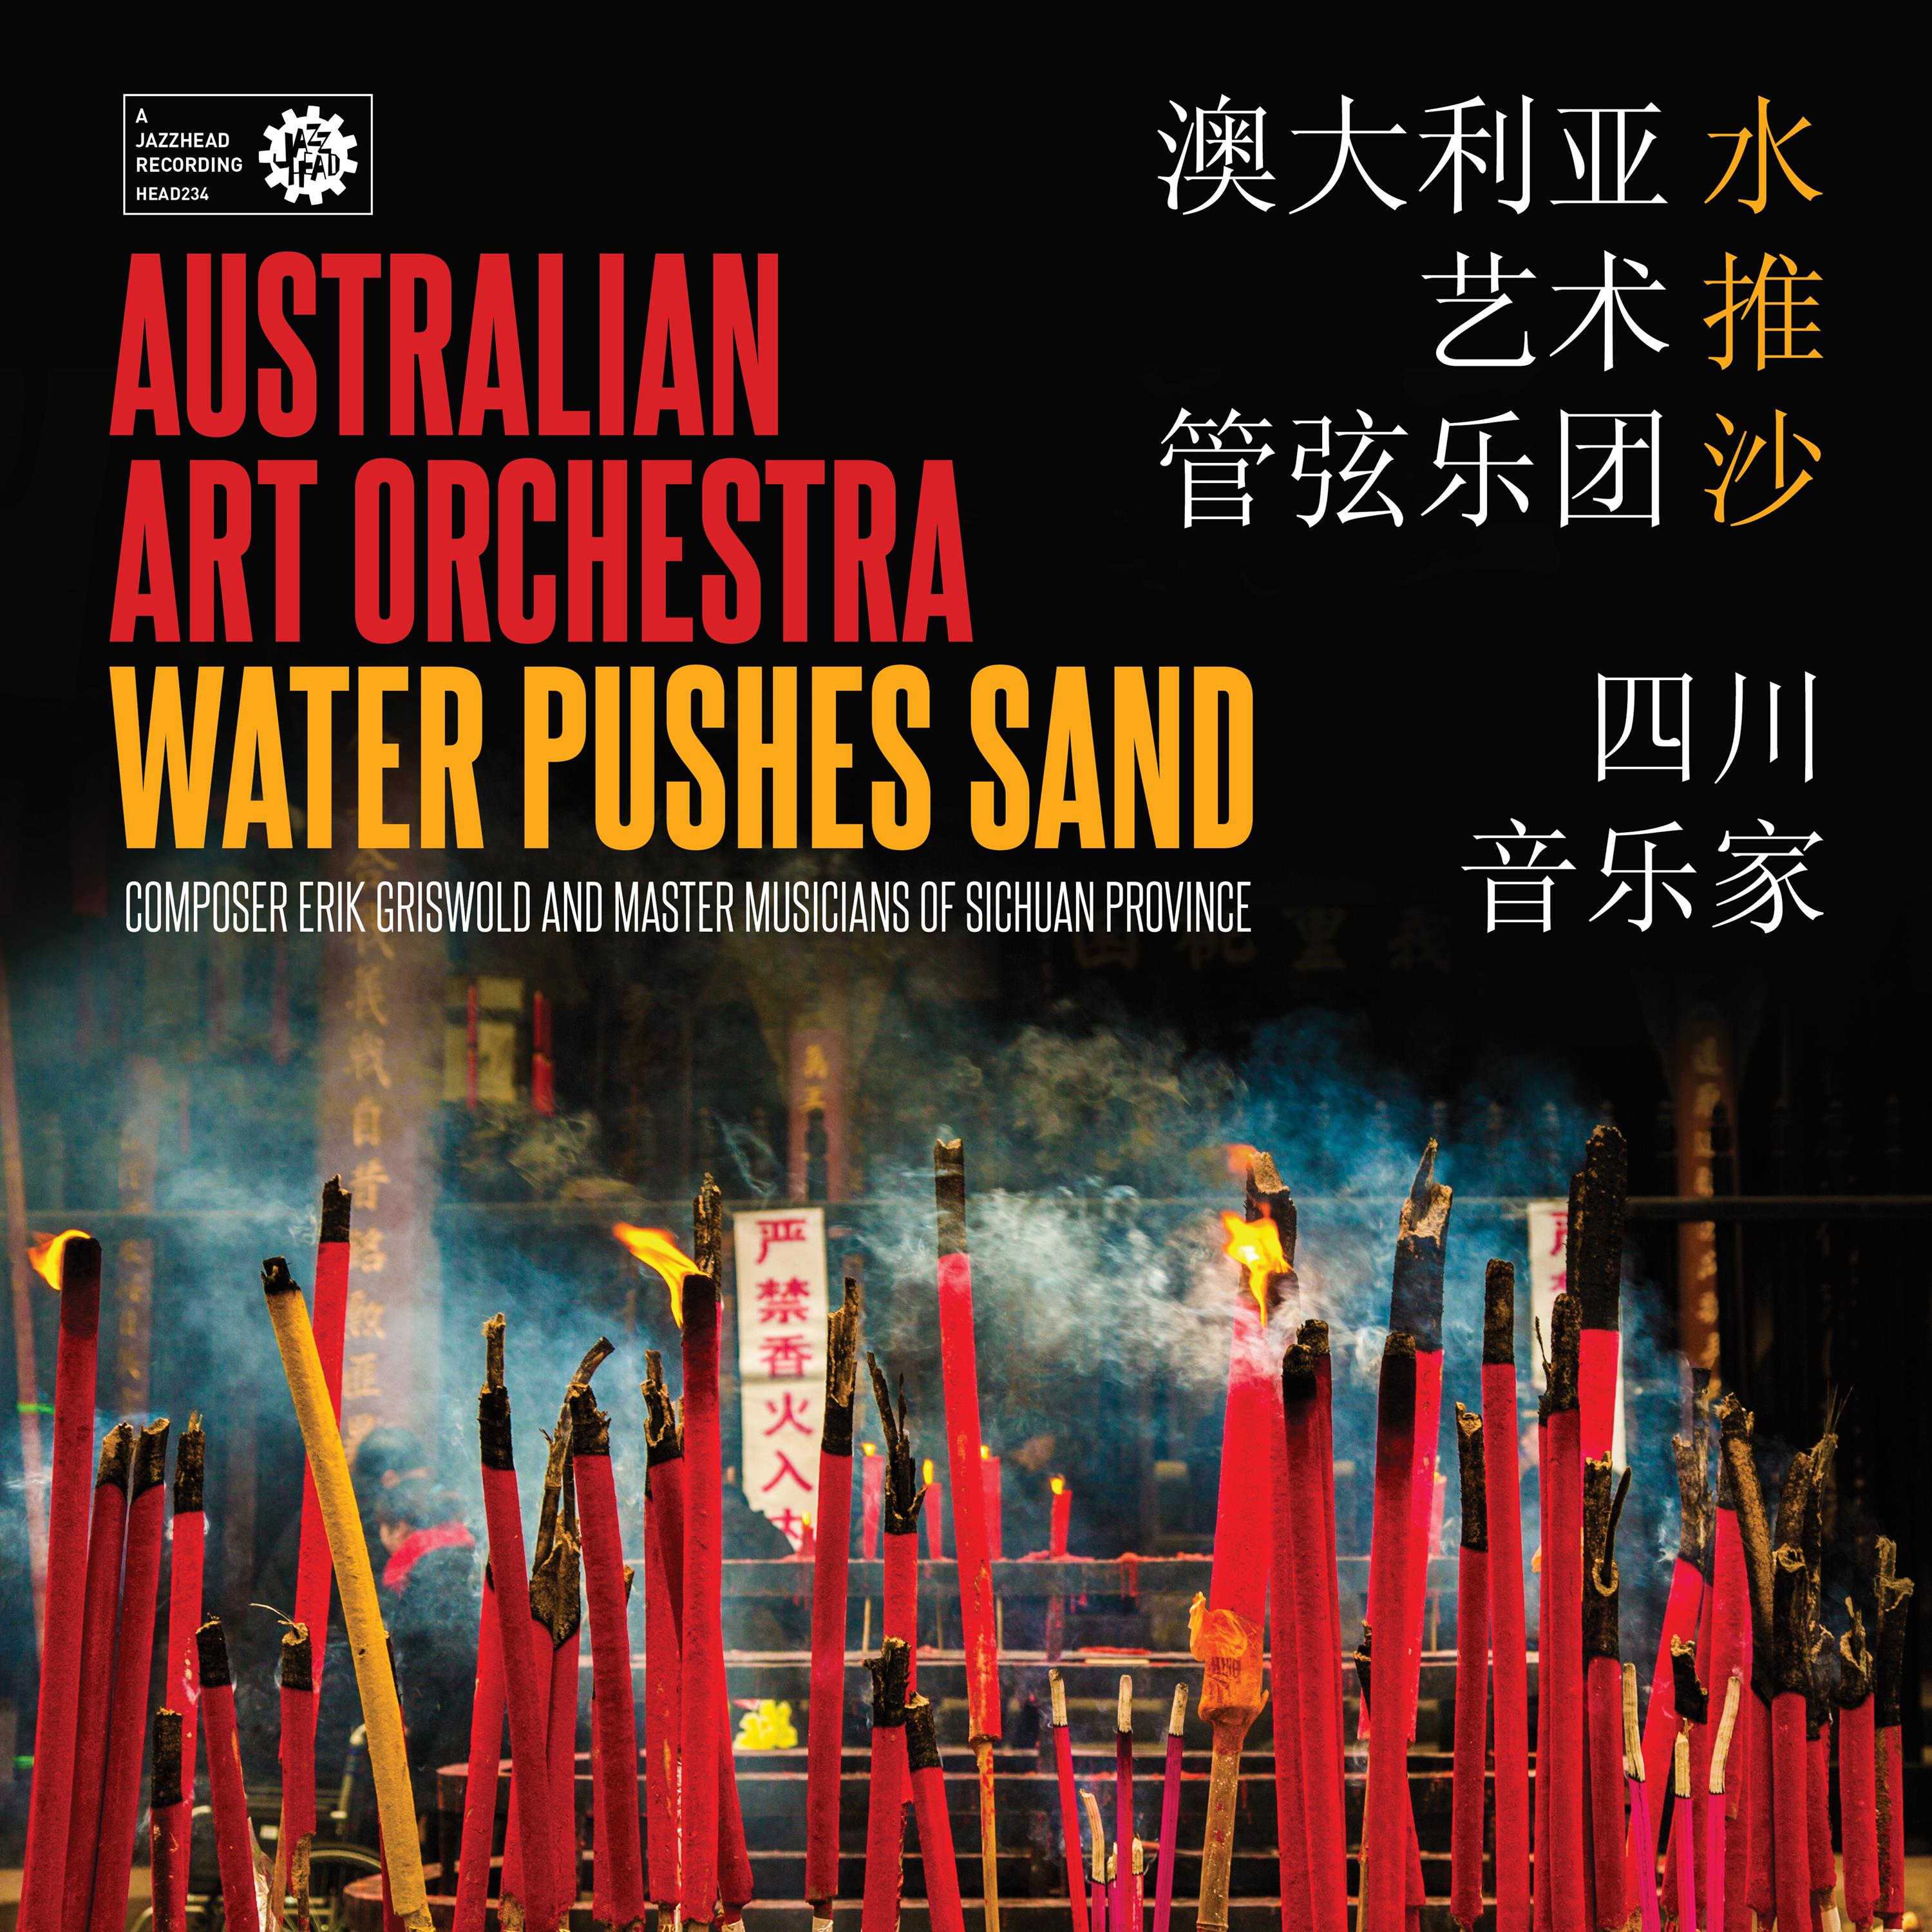 The Australian Art Orchestra - Water Pushes Sand (2017) [HDTracks FLAC 24bit/48kHz]